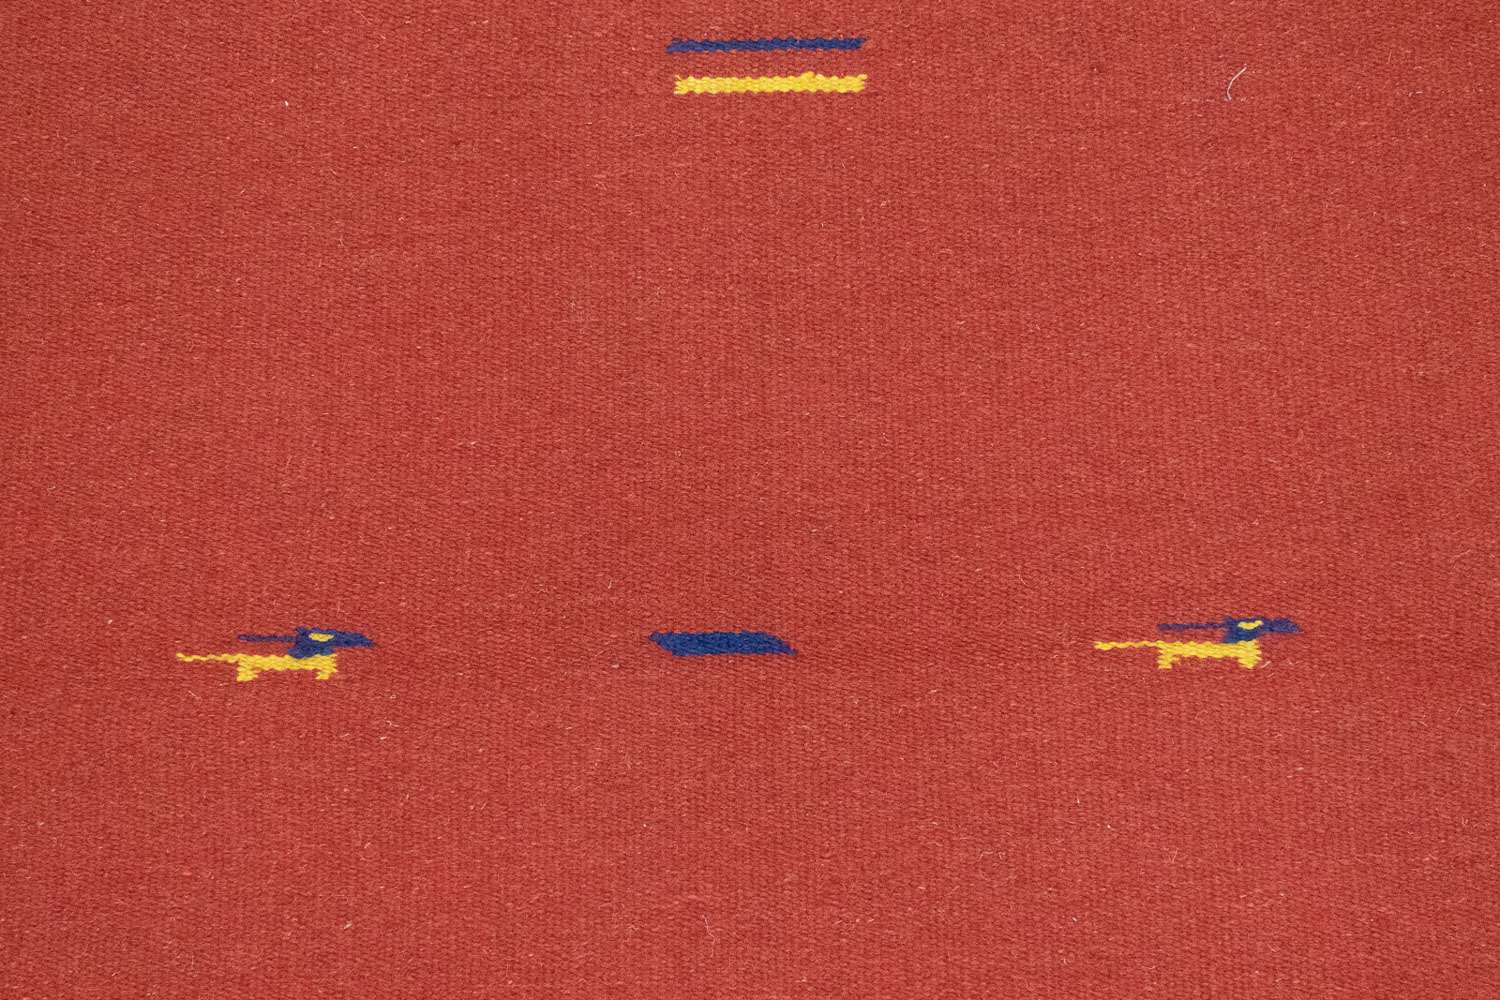 Kelim teppe - Trendy - 180 x 120 cm - rød